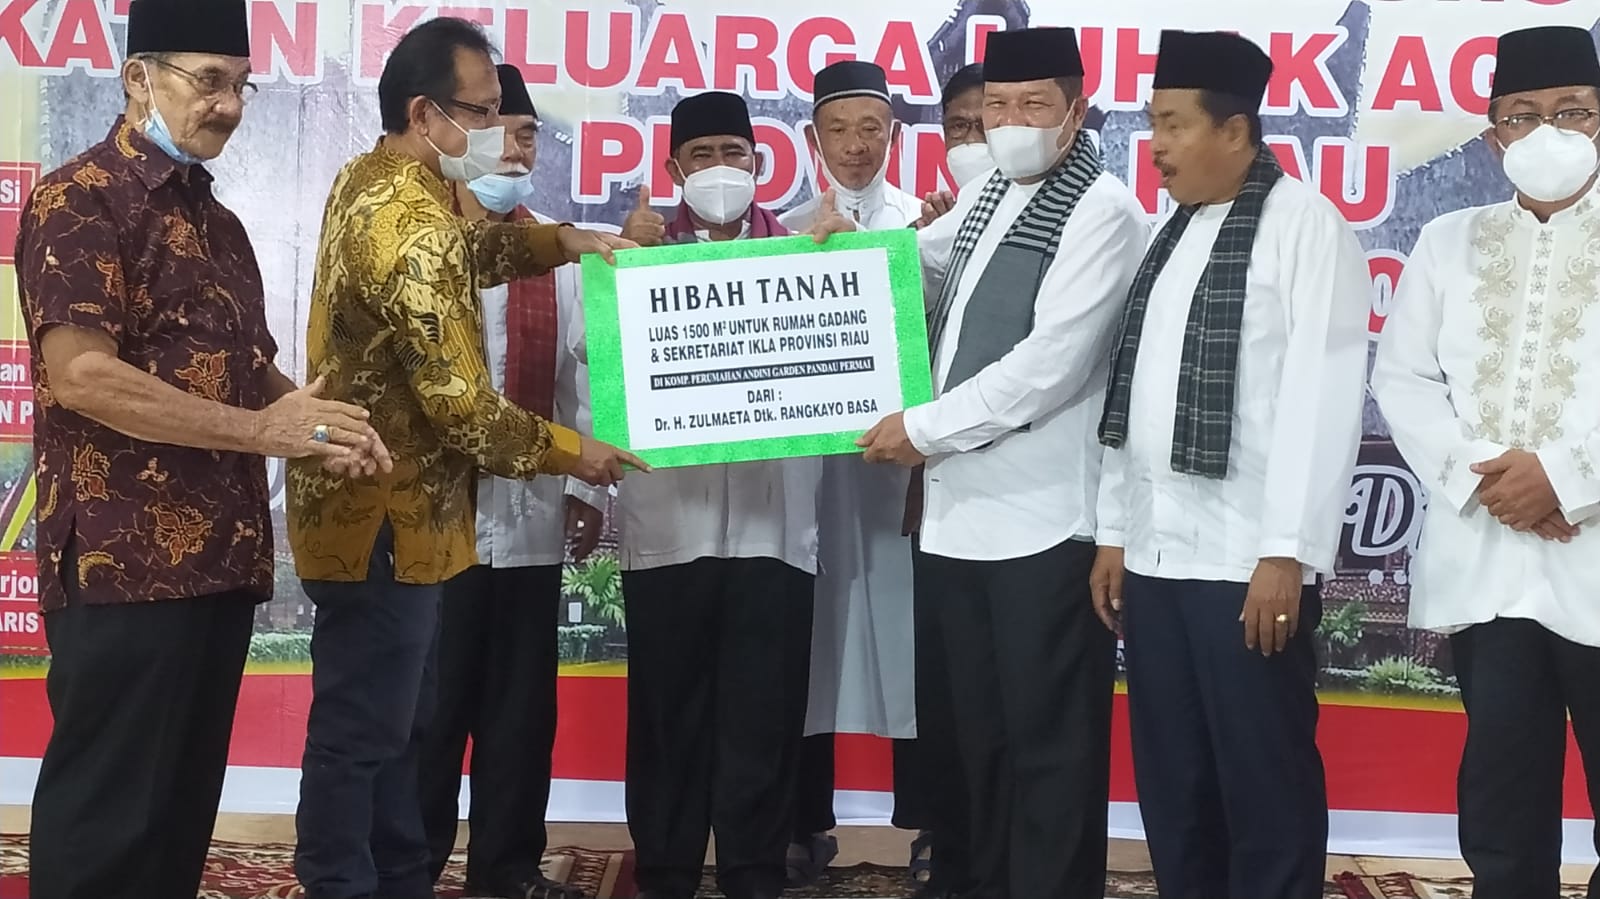 Hibahkan Tanah 1.500 Meter Persegi ke IKLA Riau, Zulmaeta: Untuk Rumah Gadang dan Sekretariat